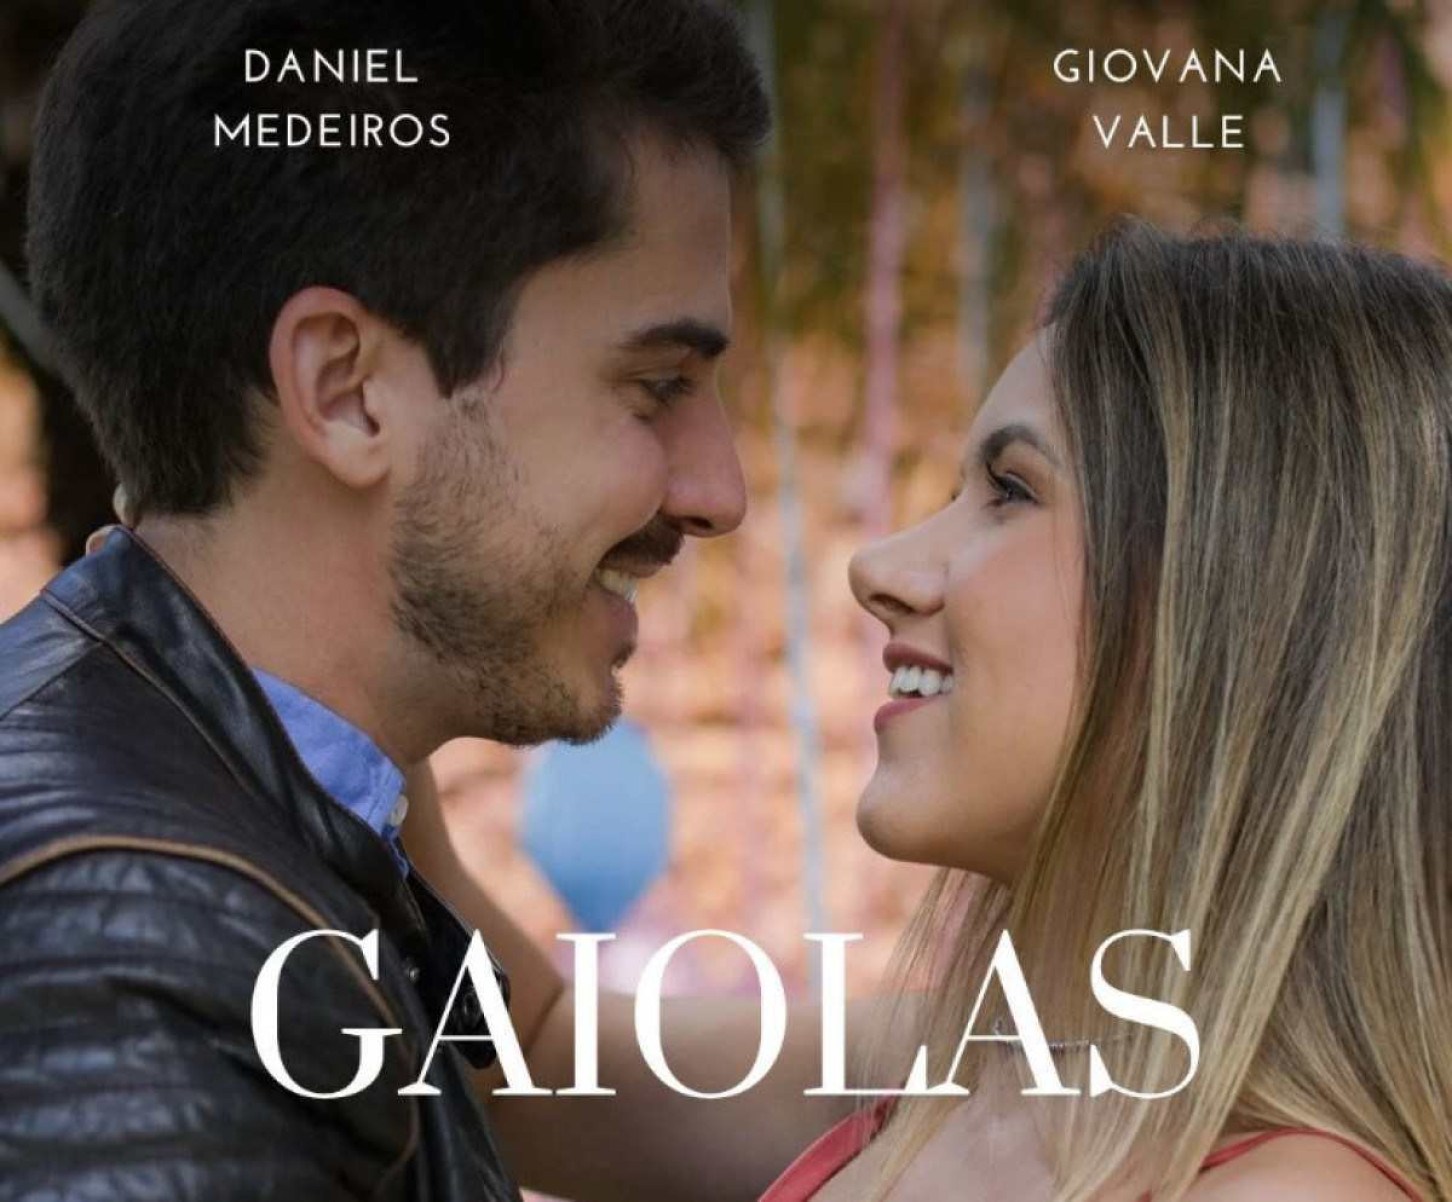 Websérie brasiliense de romance, Gaiolas estreia neste domingo (28/7)